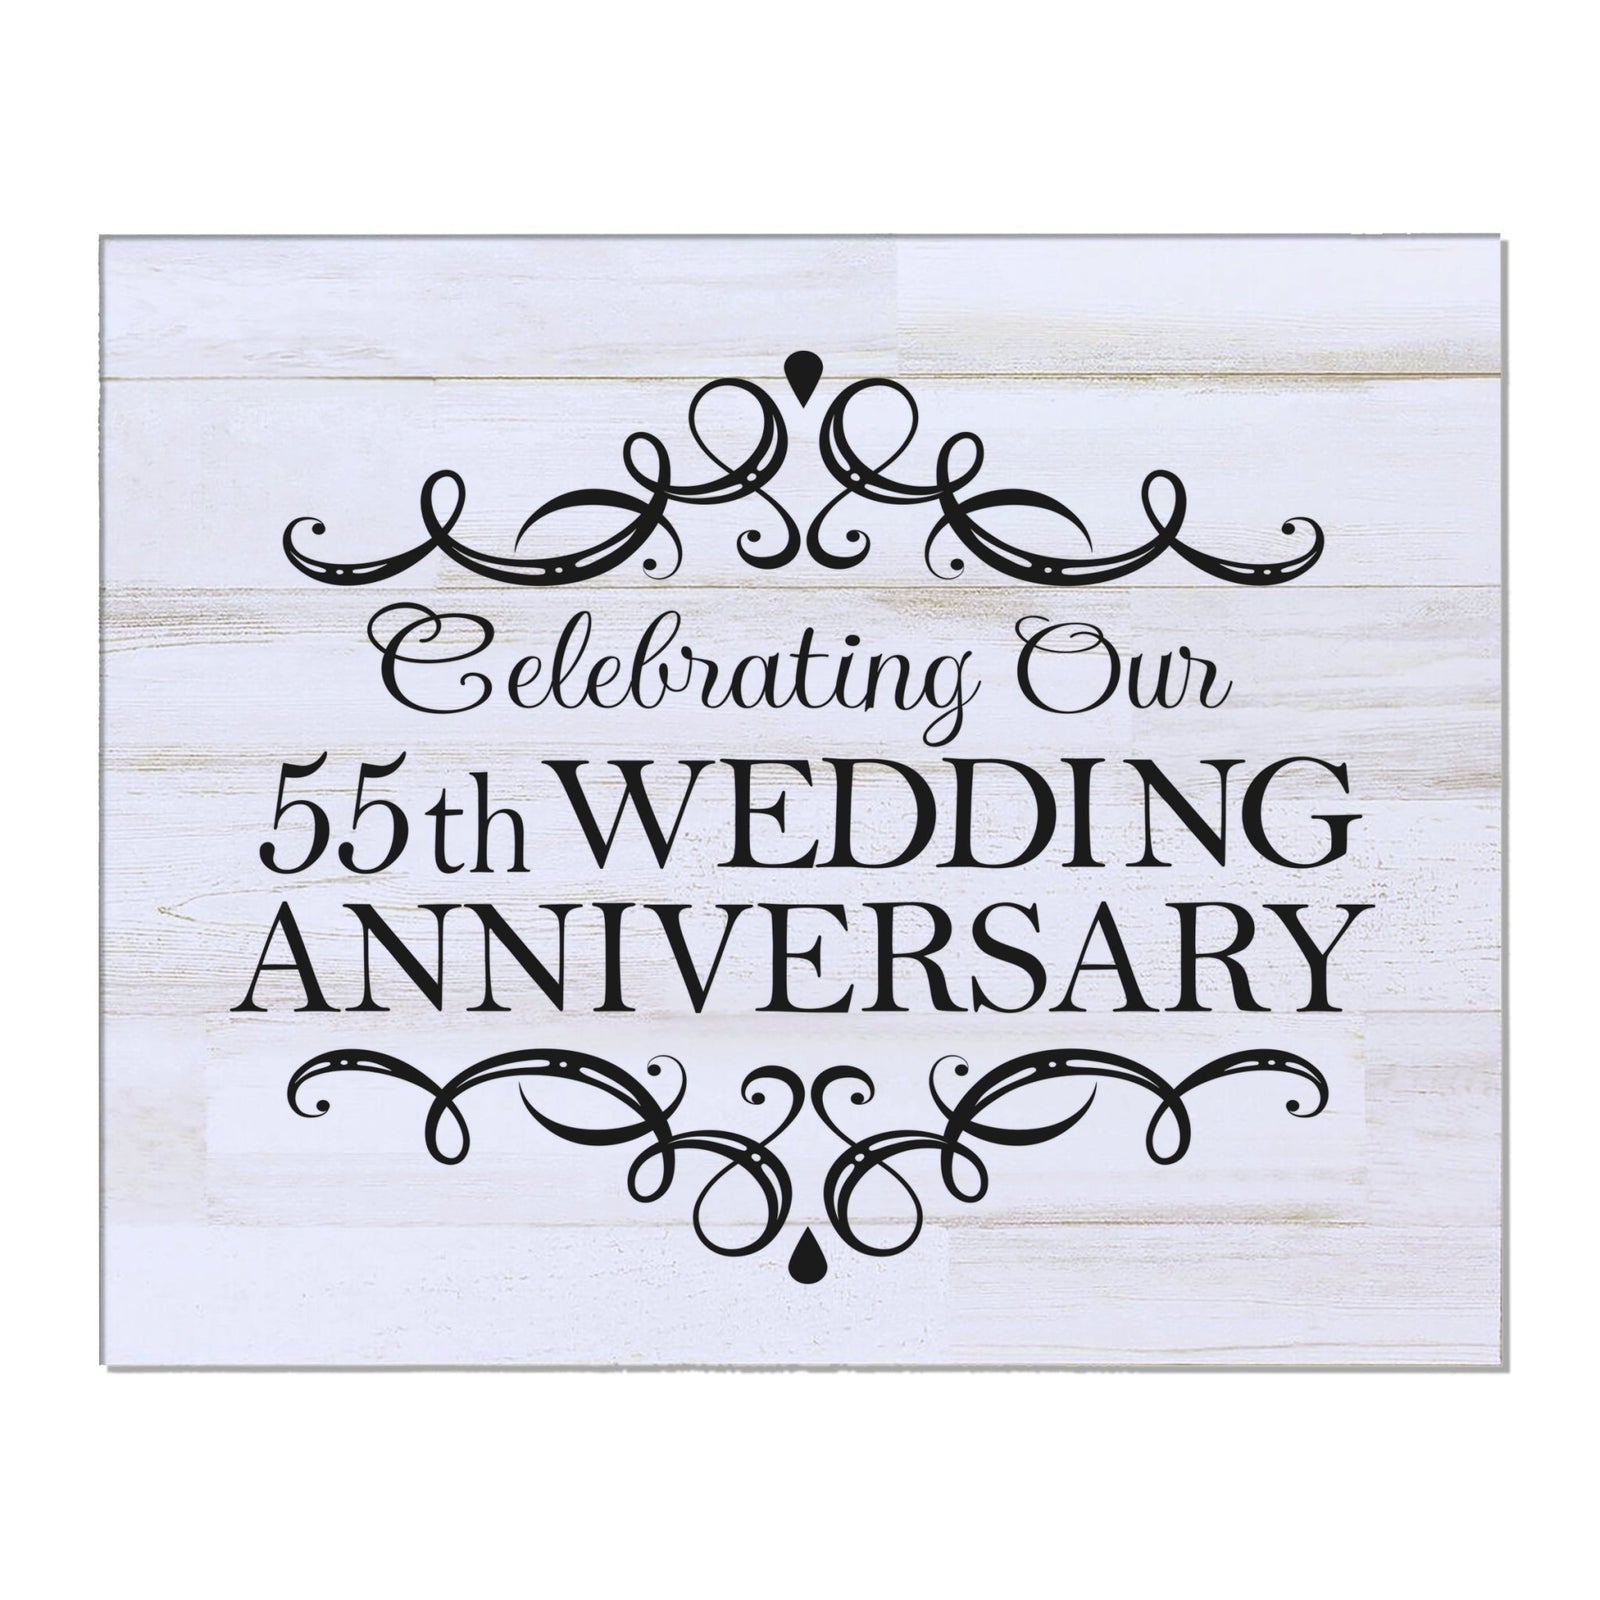 55th Wedding Anniversary Wall Plaque - Celebrating - LifeSong Milestones